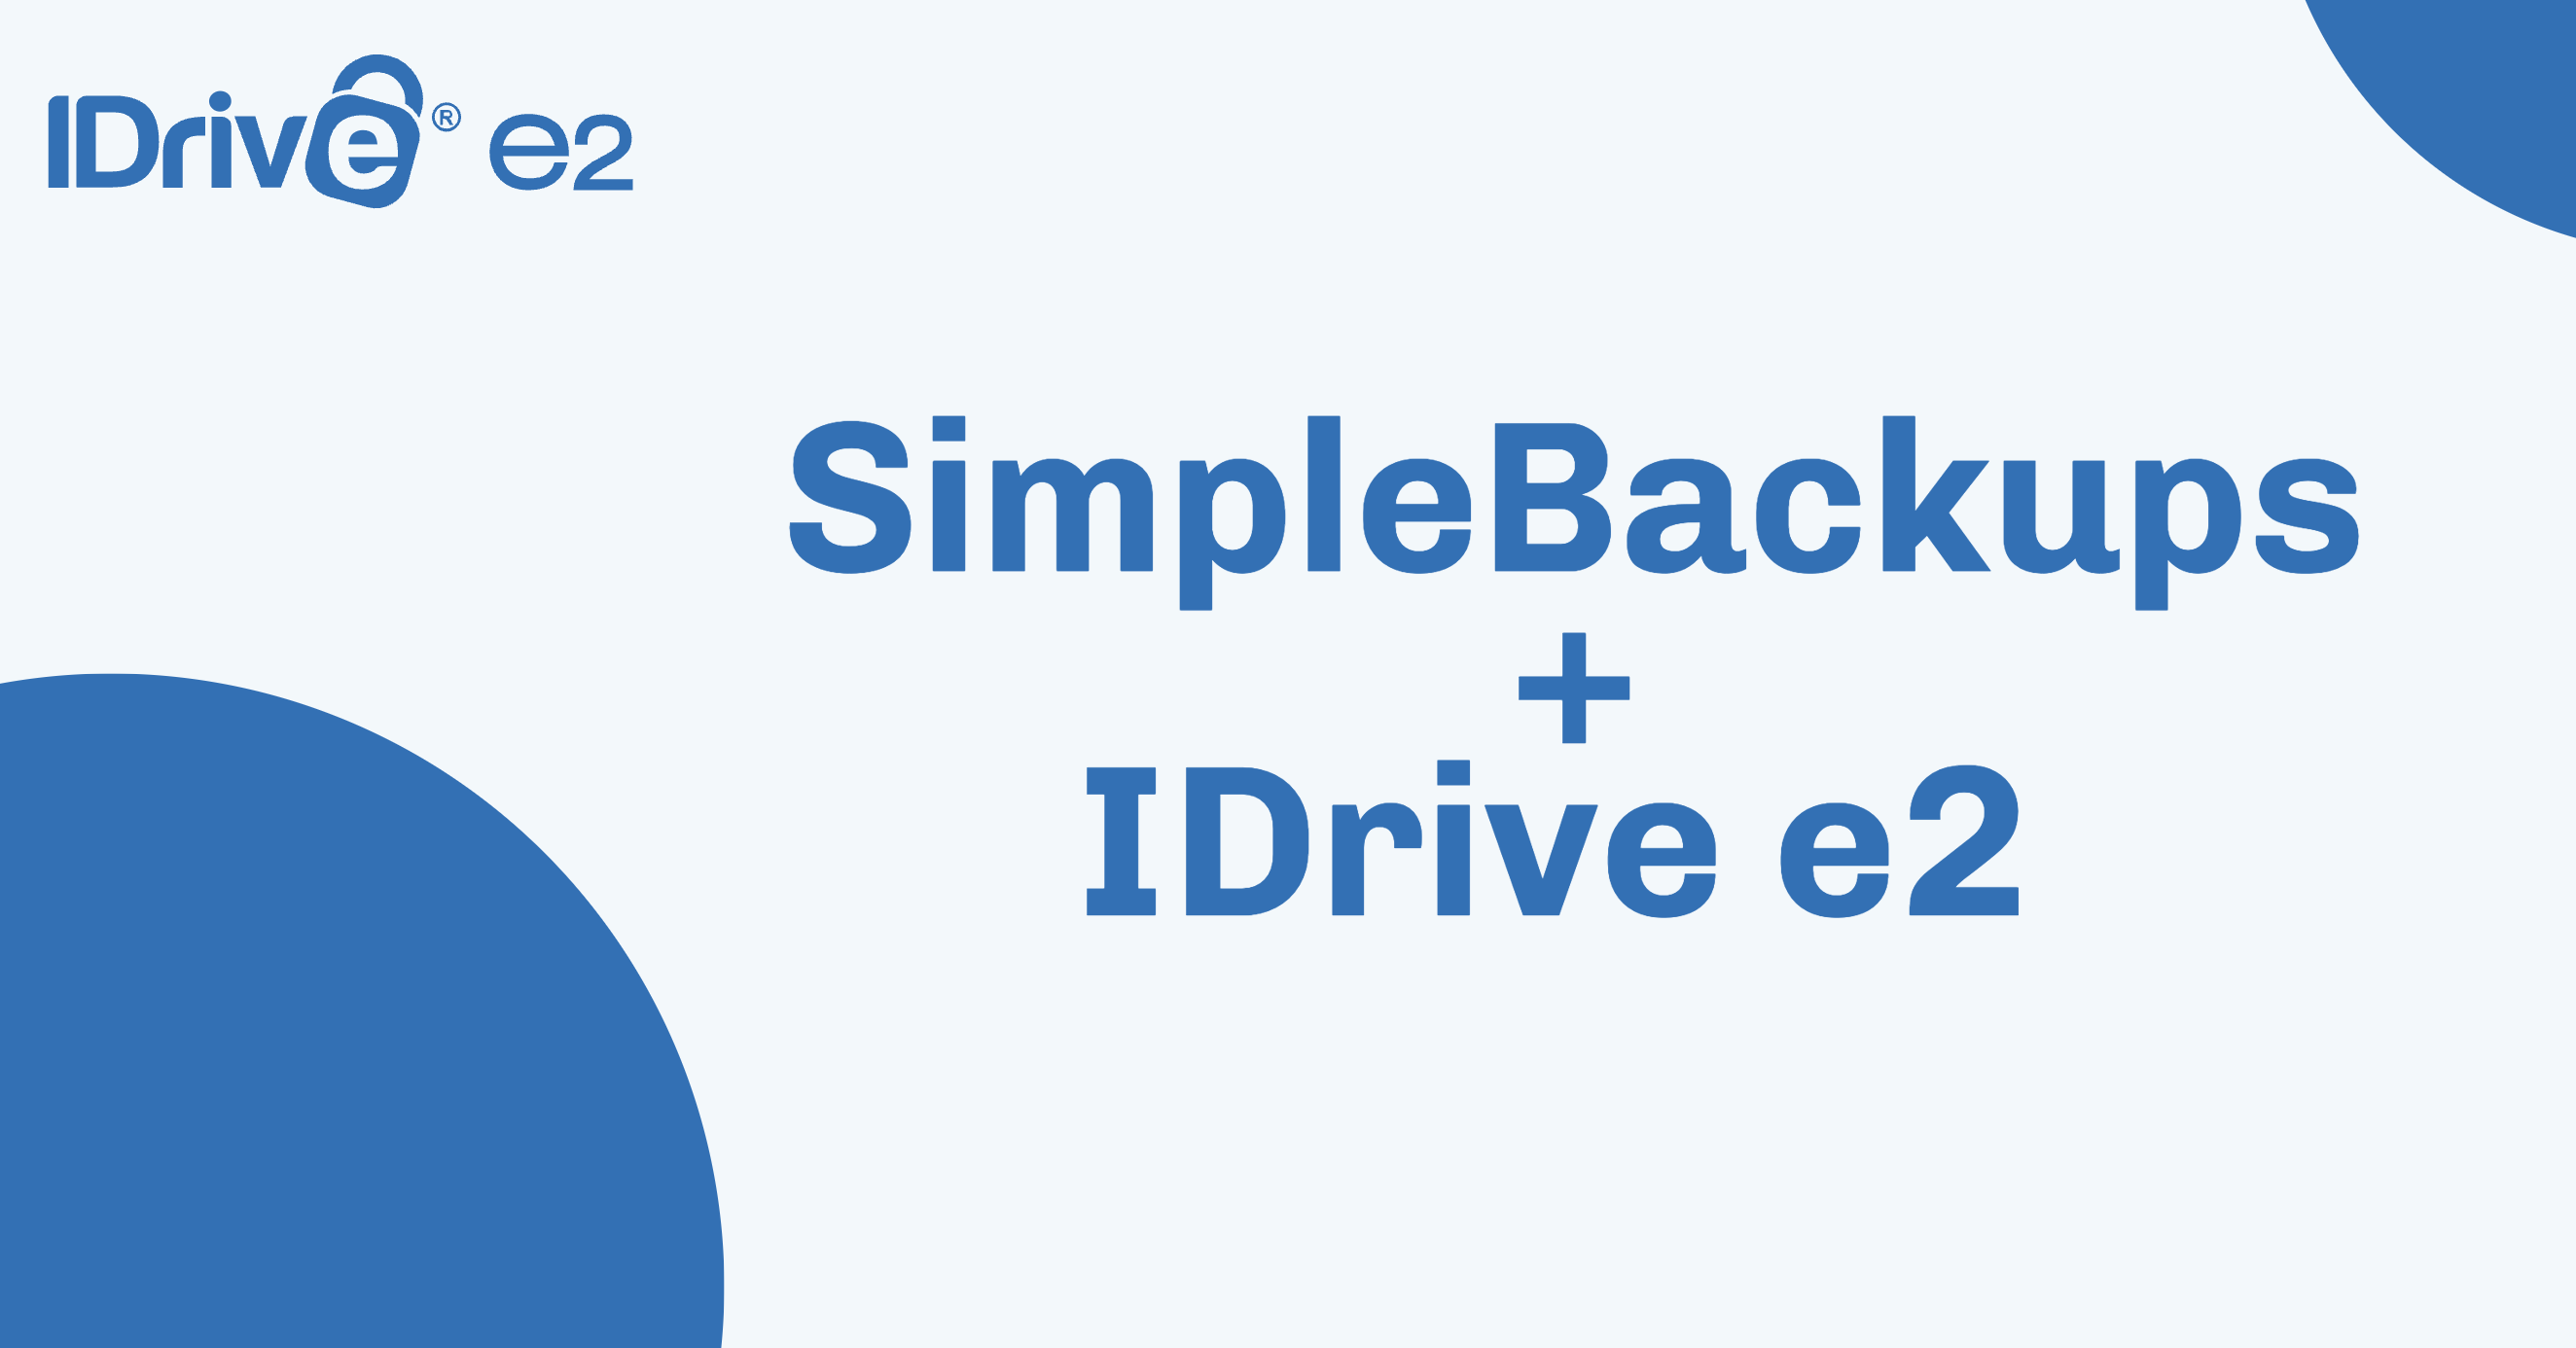 Your backups on IDrive E2 with SimpleBackups